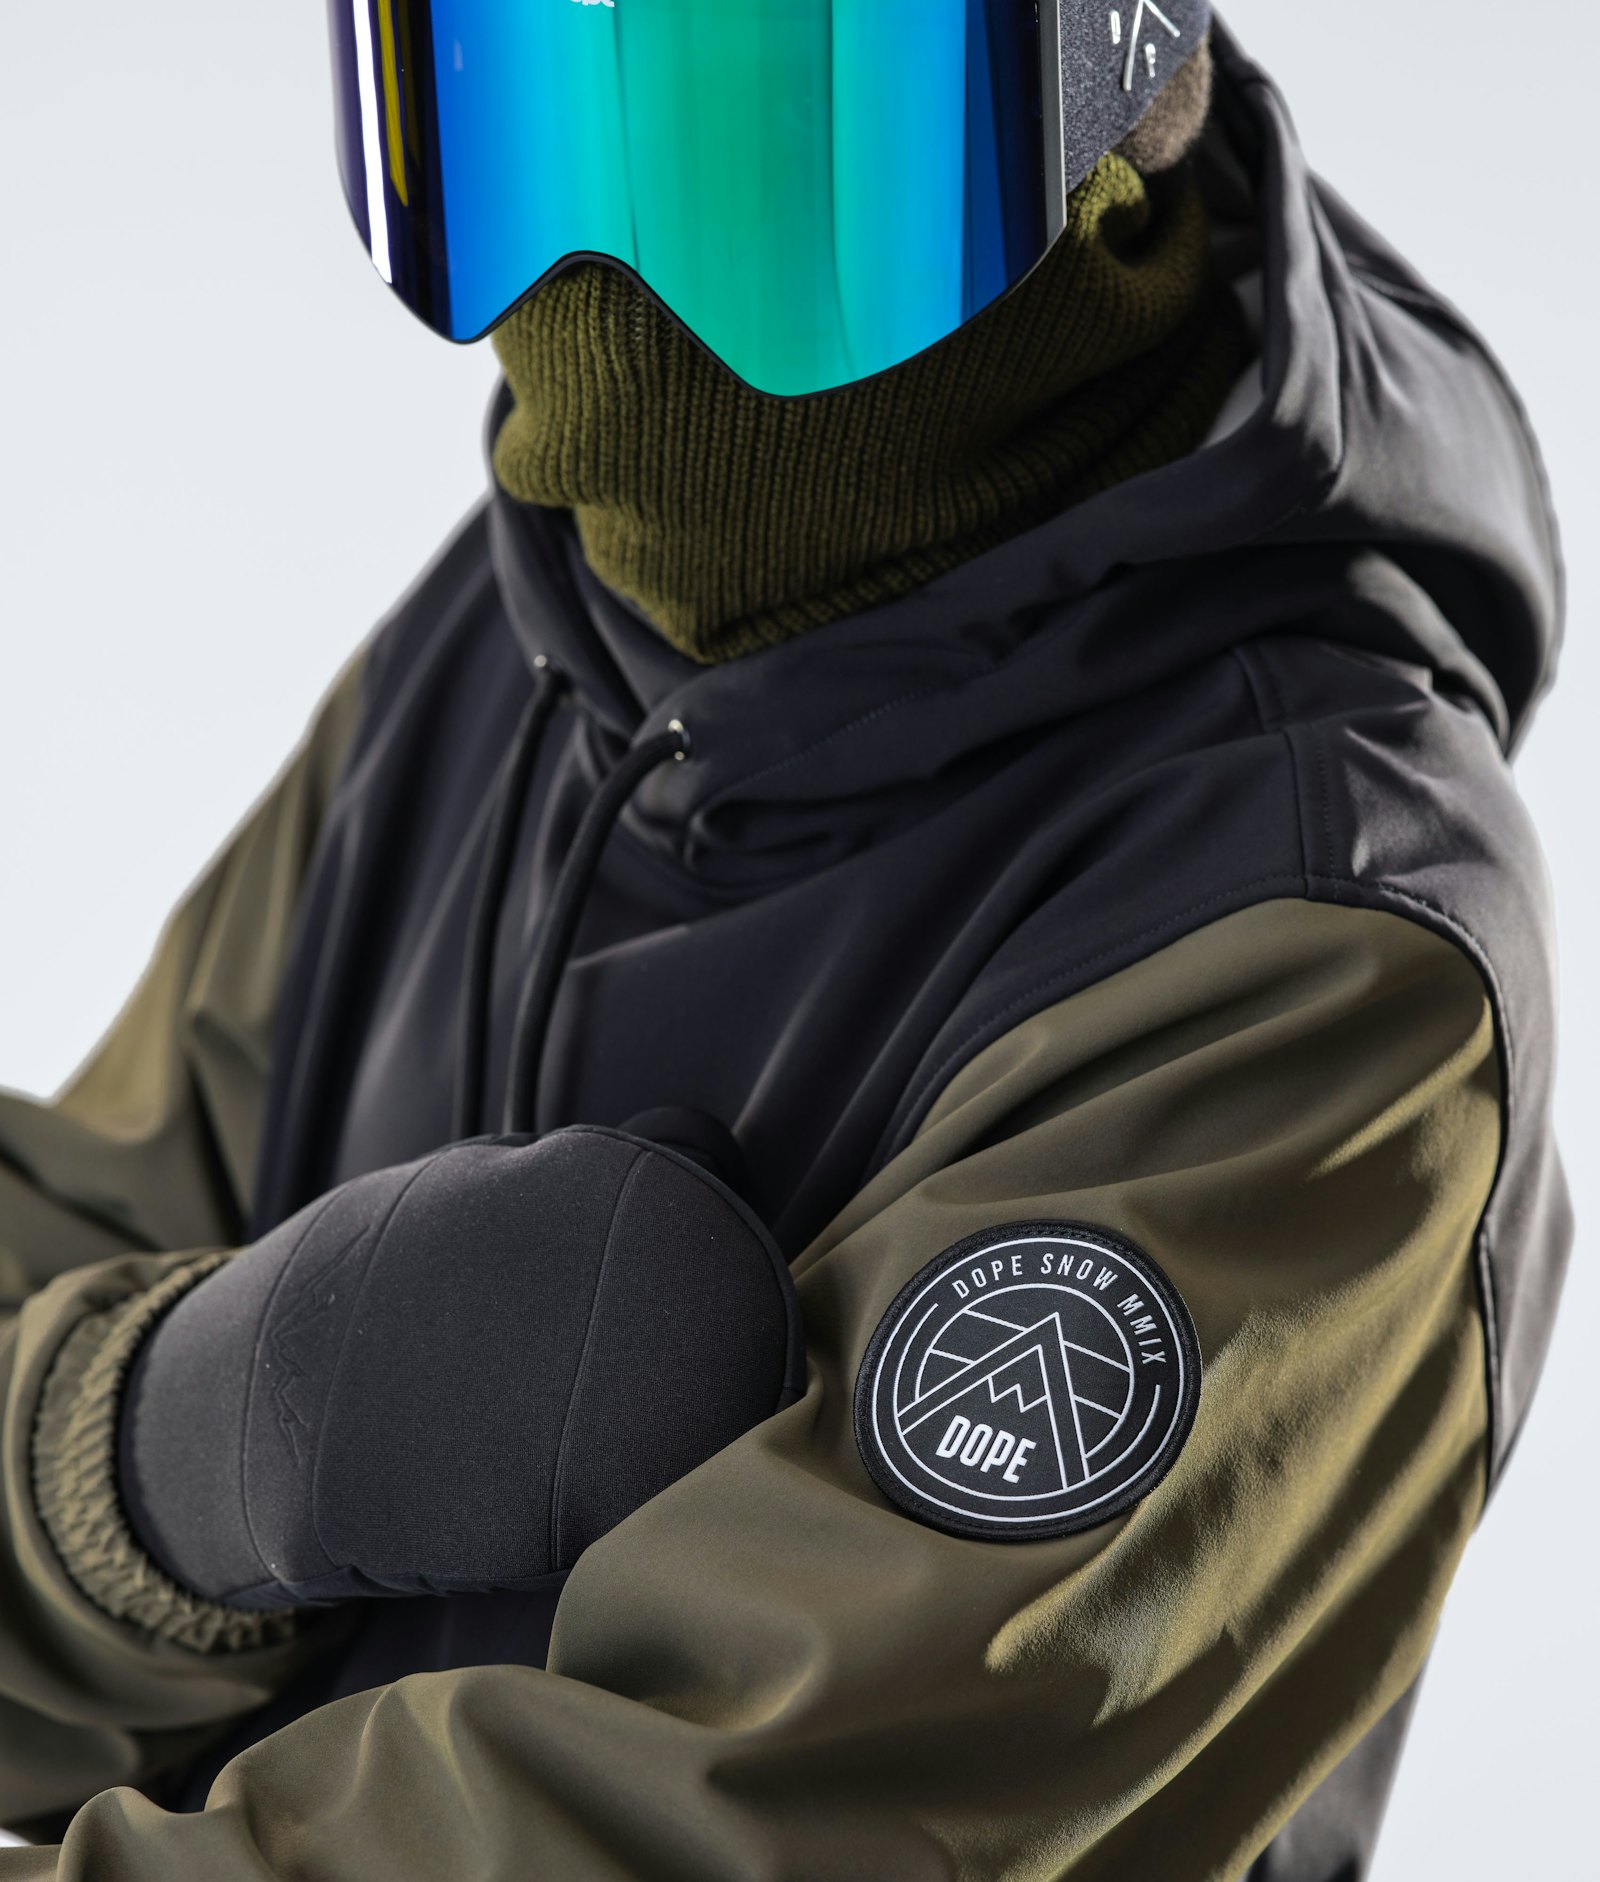 Wylie 10k Snowboard Jacket Men Patch Black/Olive Green